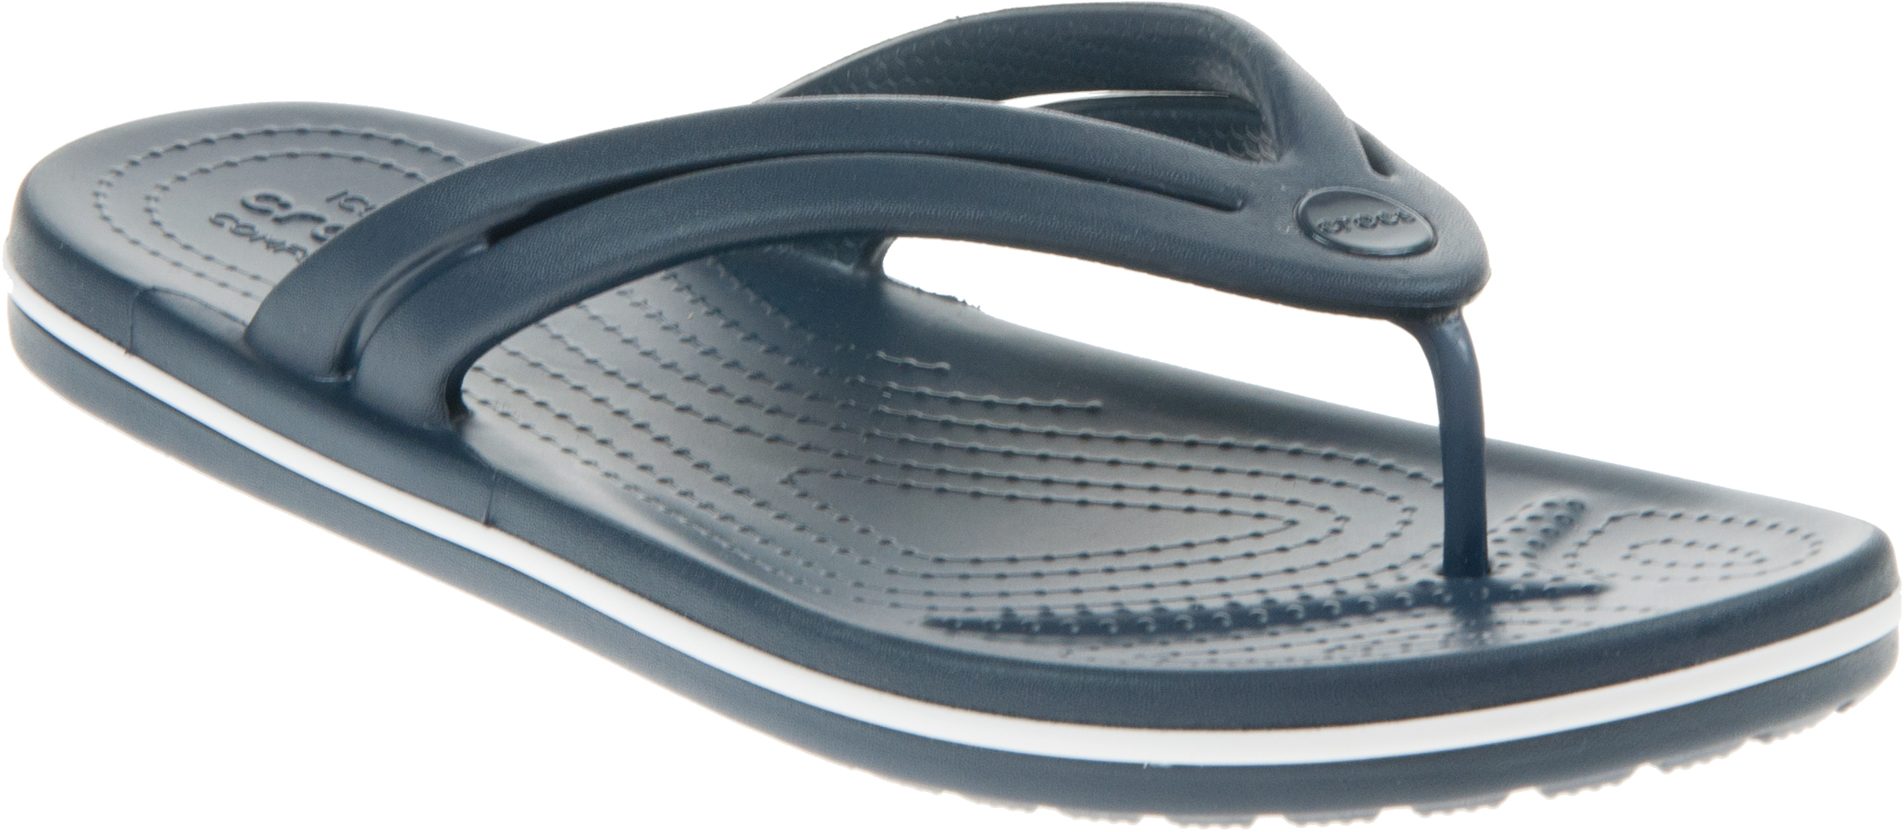 Crocs Crocband Flip Navy 206100-410 - Toe Post Sandals - Humphries Shoes